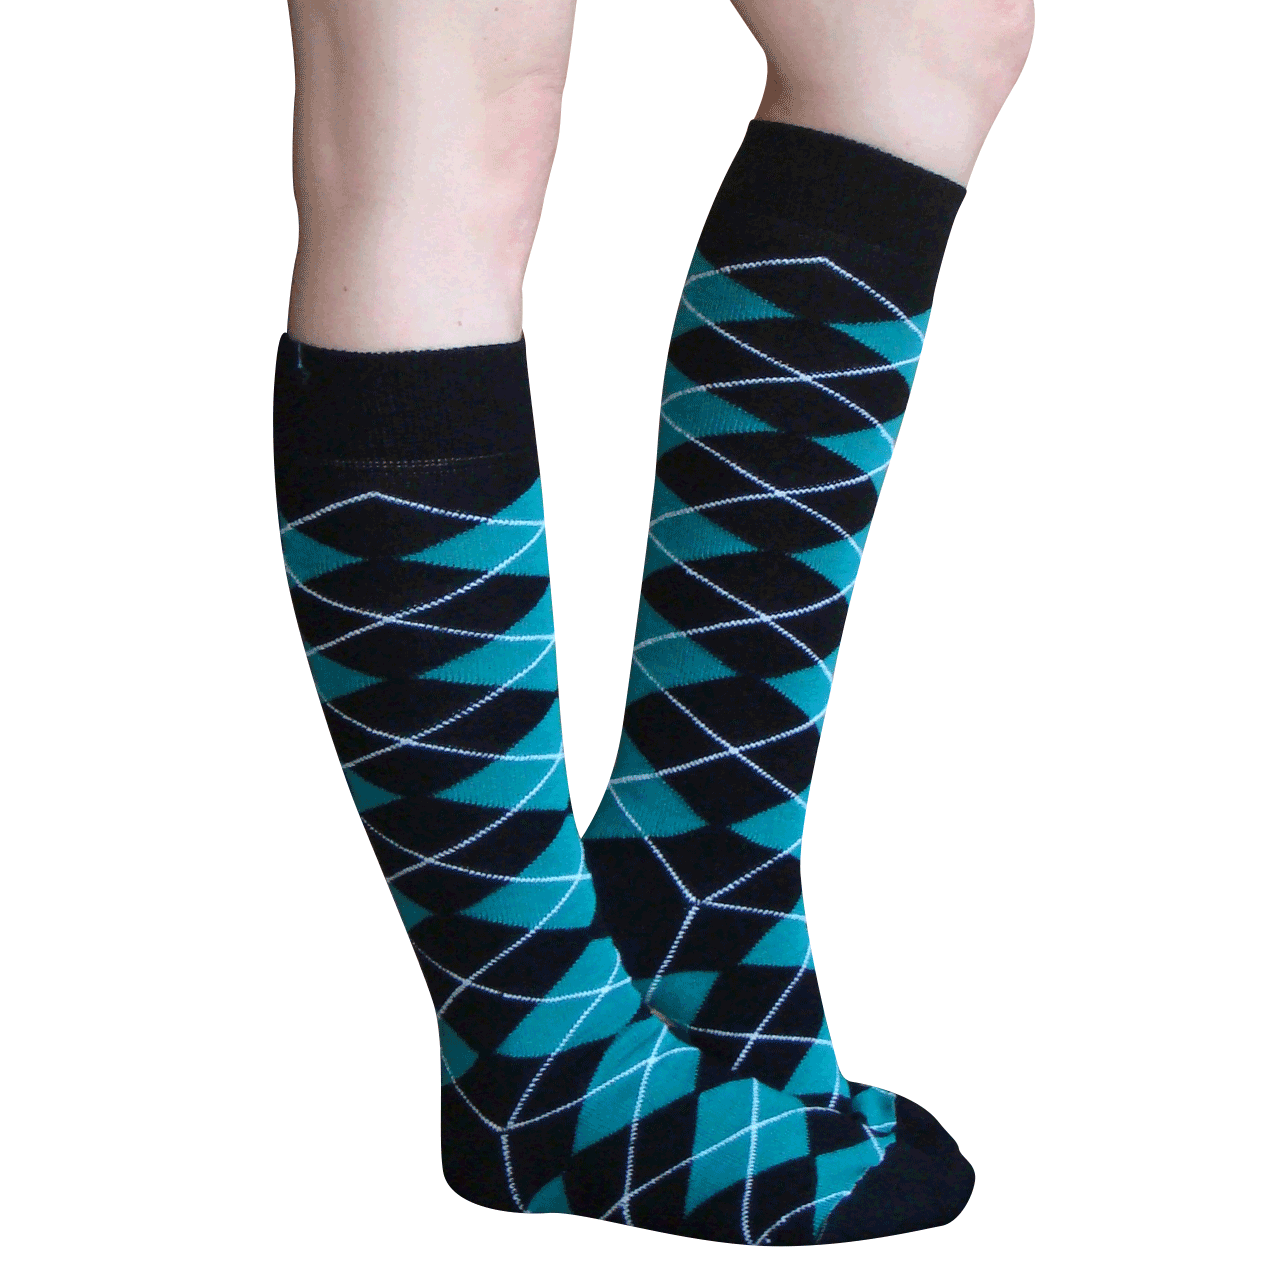 Black/Teal Argyle Socks